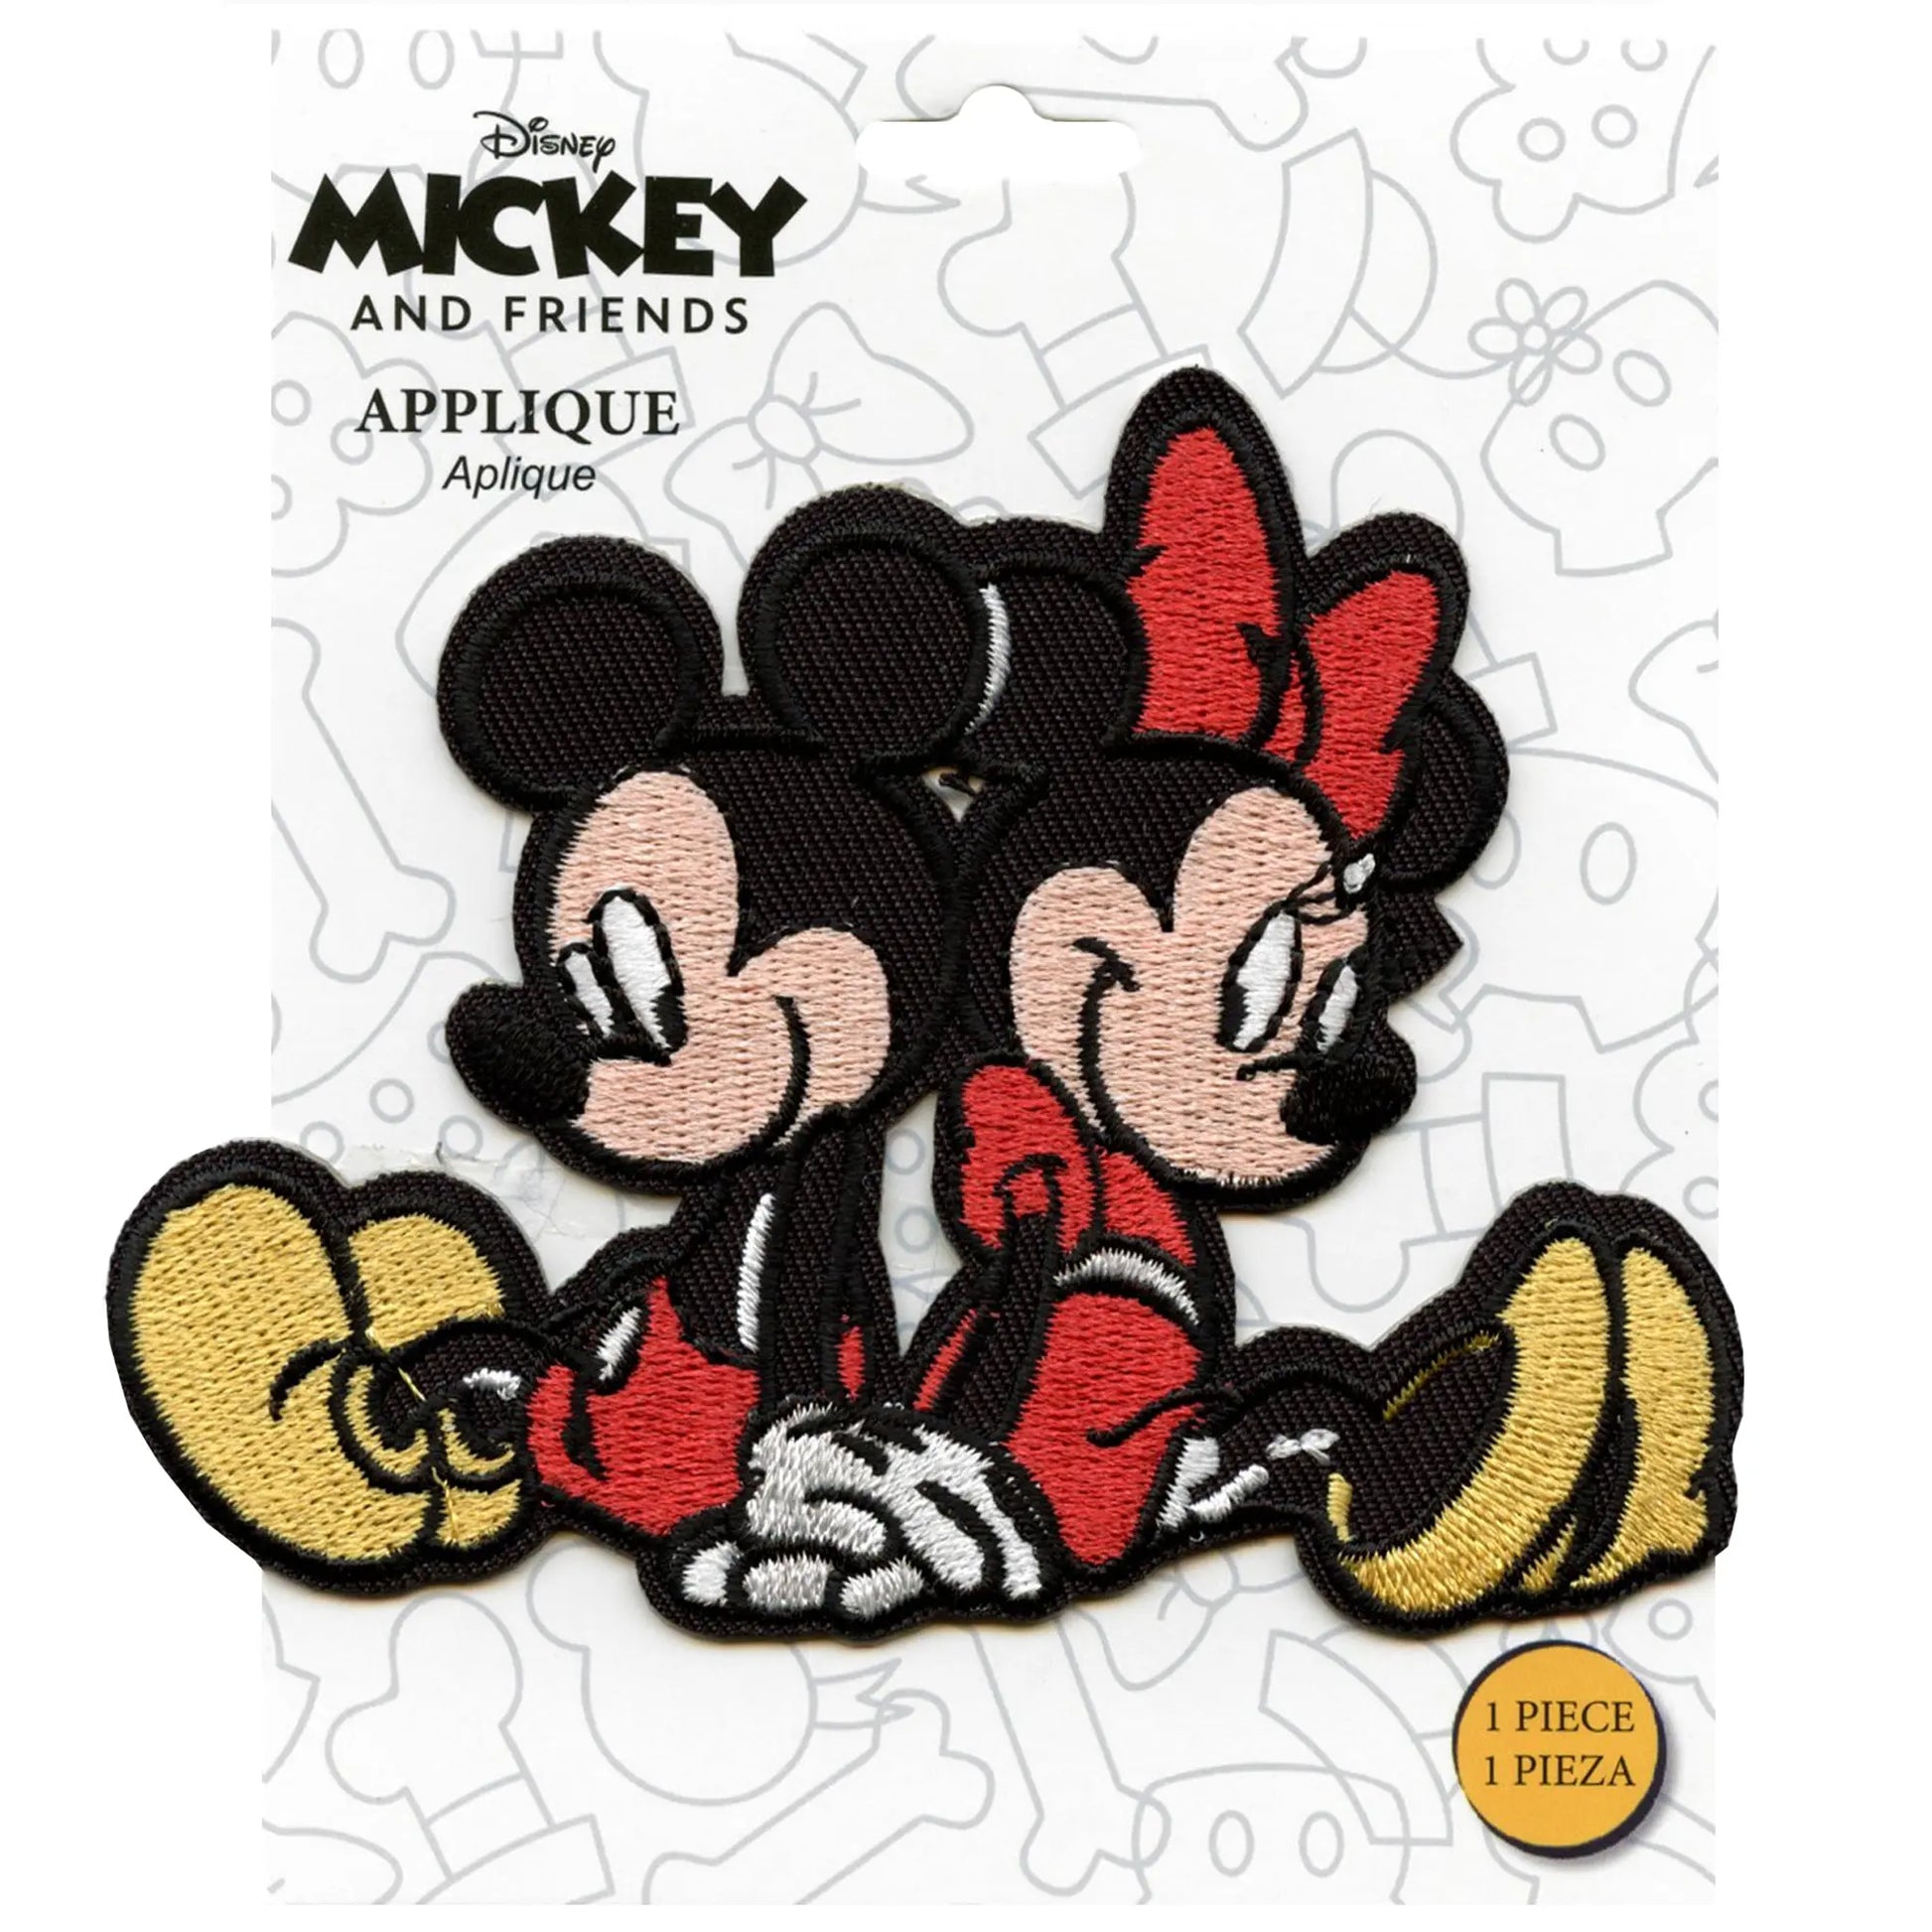 Disney Iron On Patch - Mickey Mouse Walt Disney World